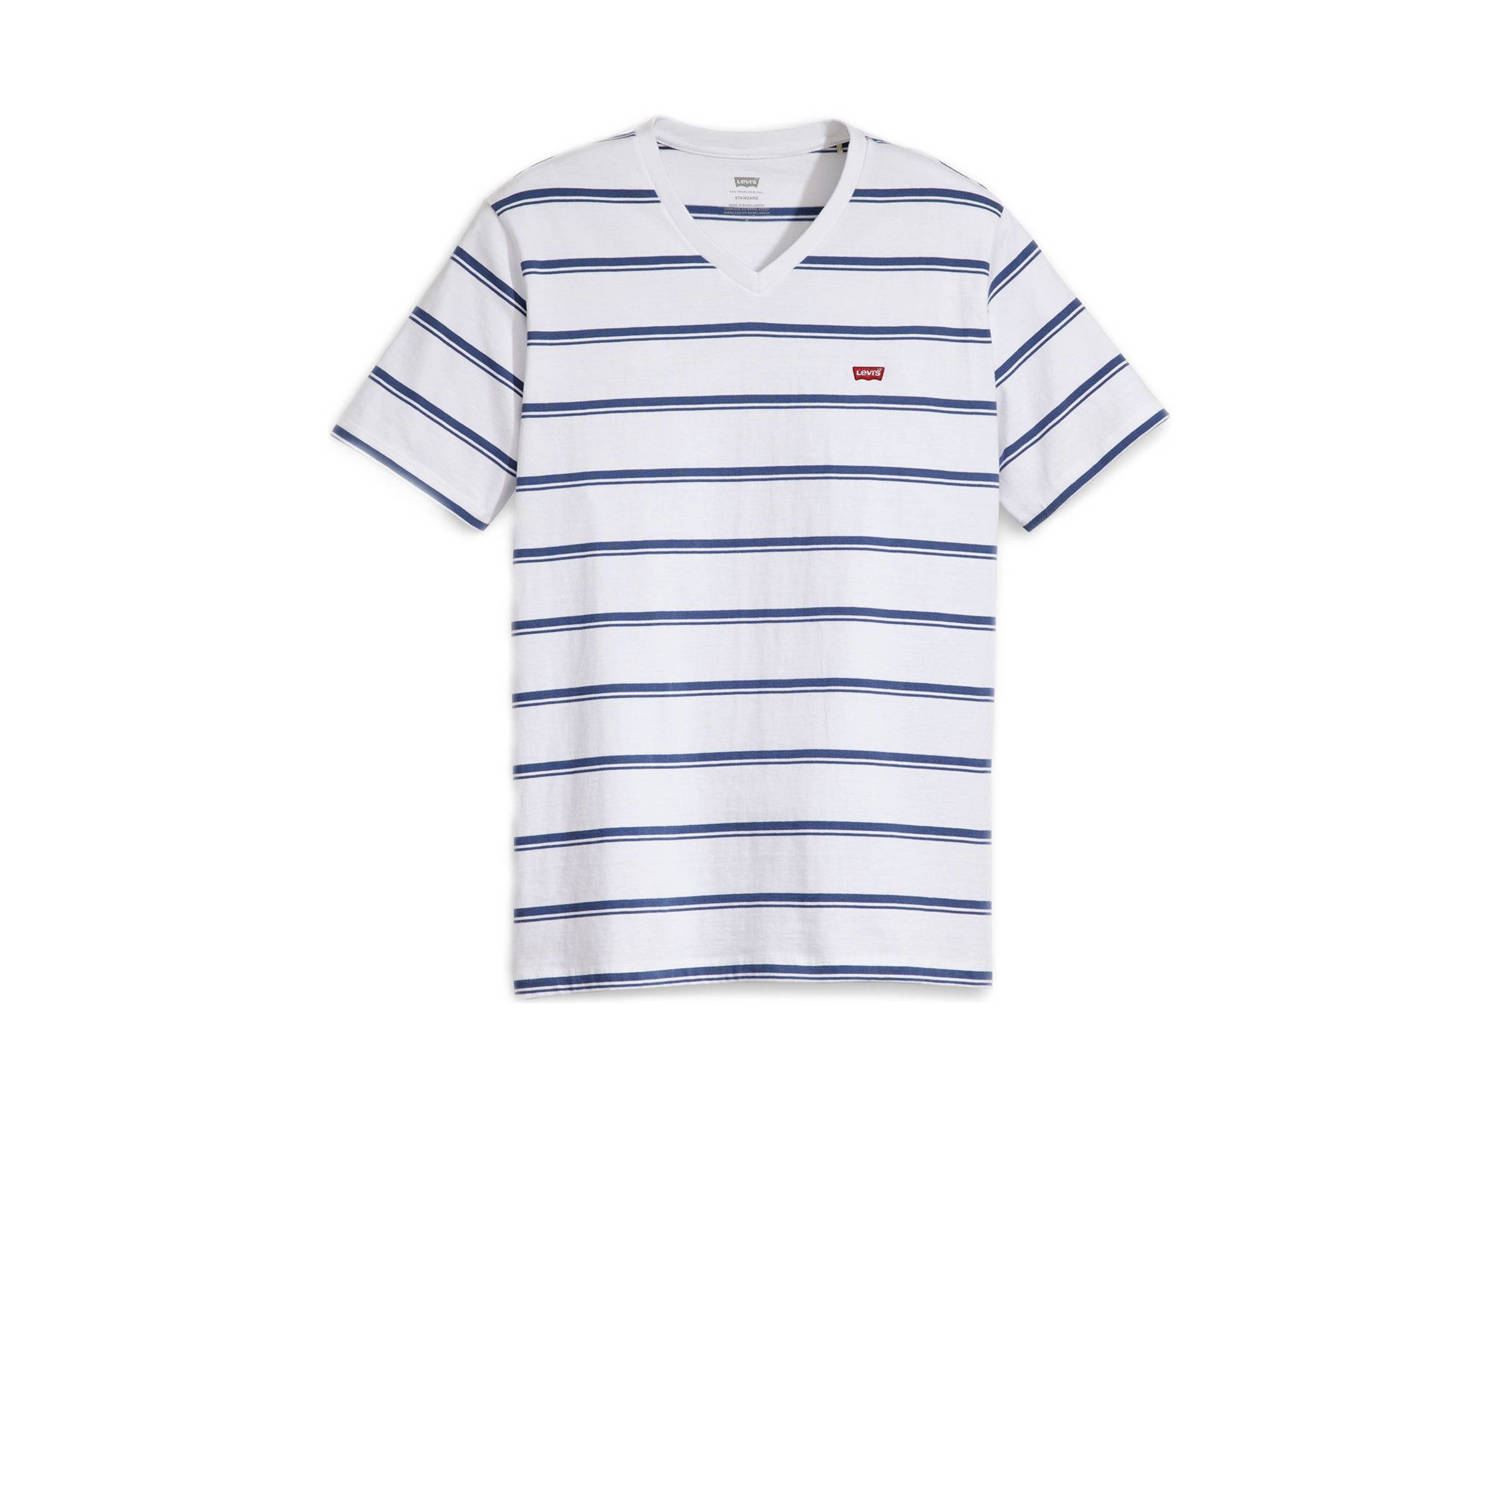 Levi's gestreept T-shirt sail stripe brigh